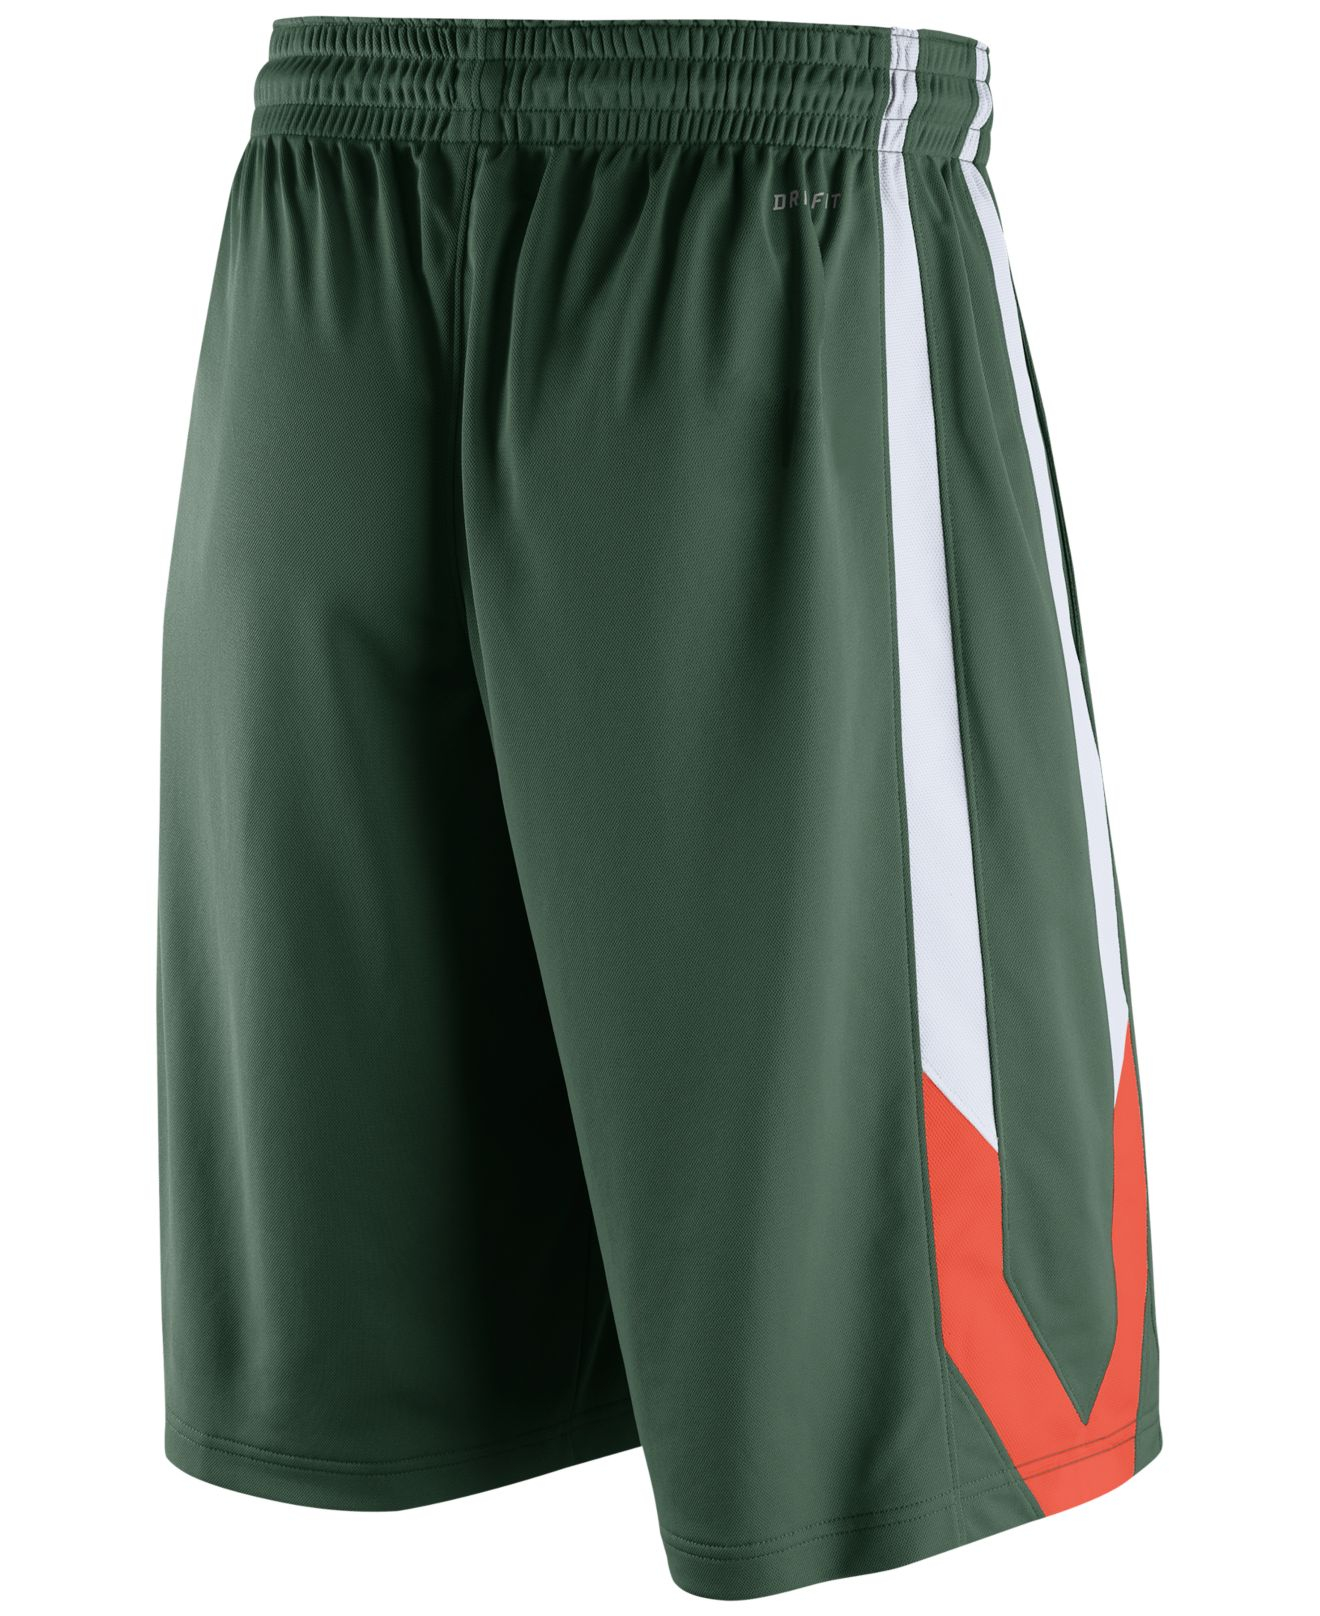 Lyst - Nike Men'S Miami Hurricanes Classic Basketball Shorts in Green ...